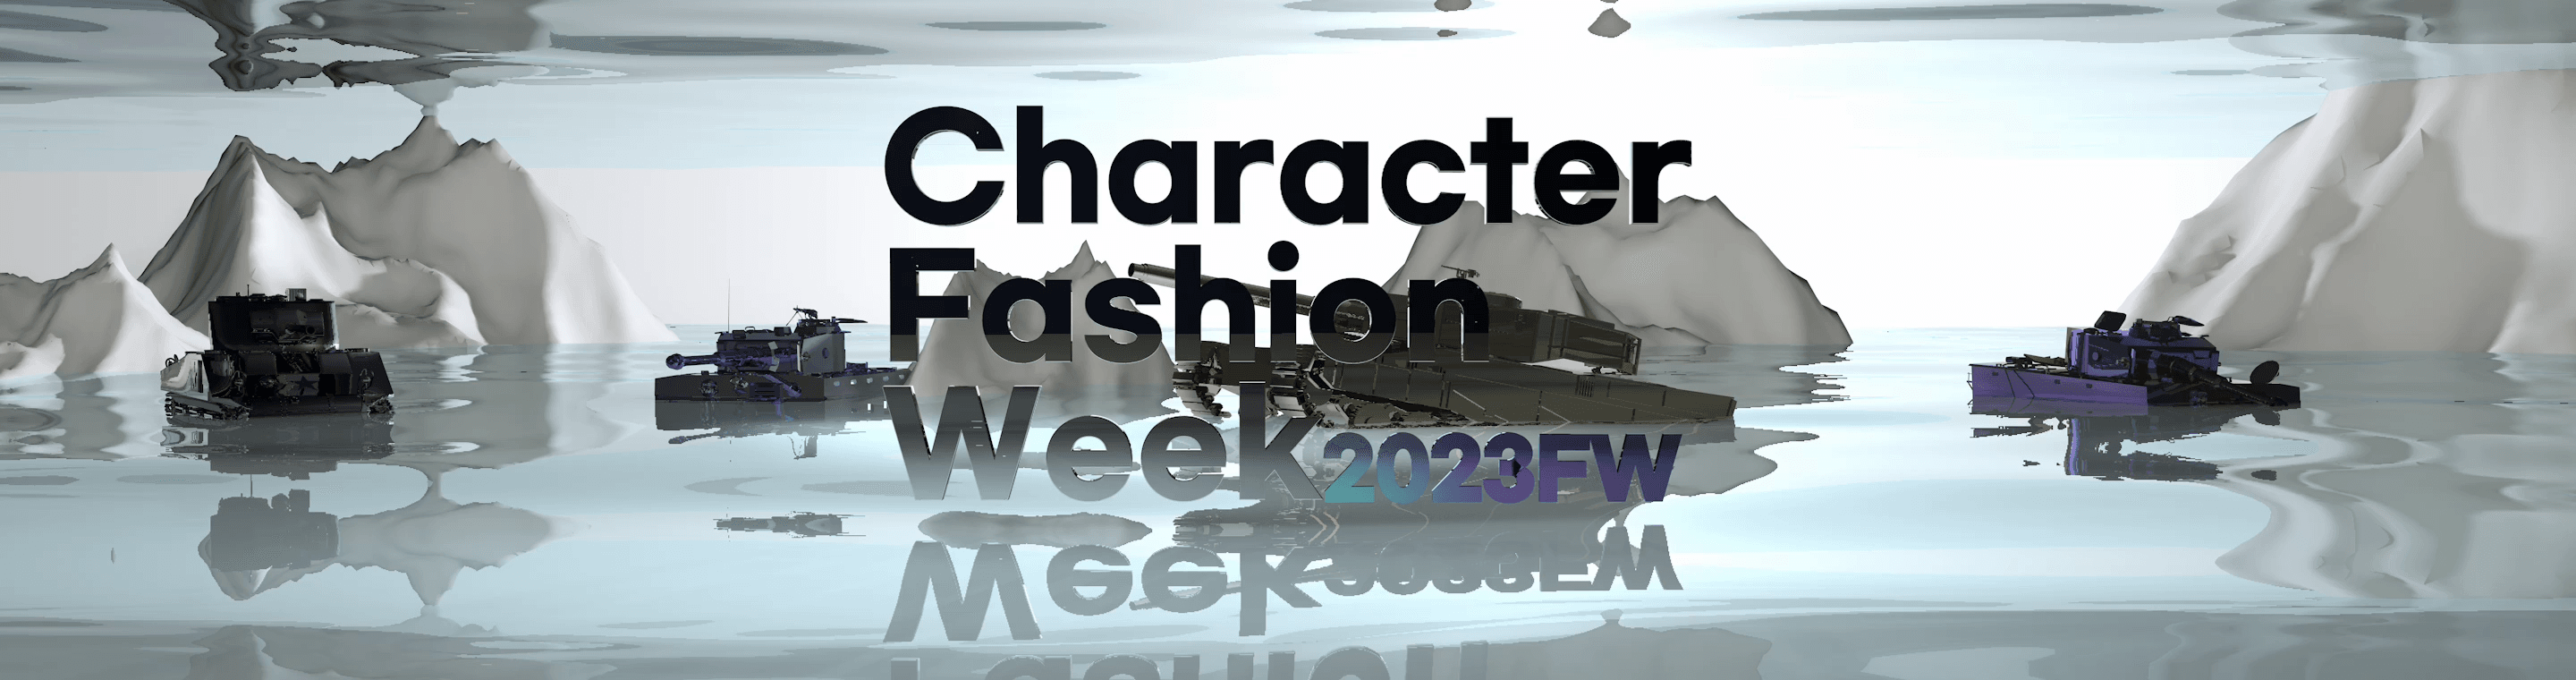 Character Fashion Week